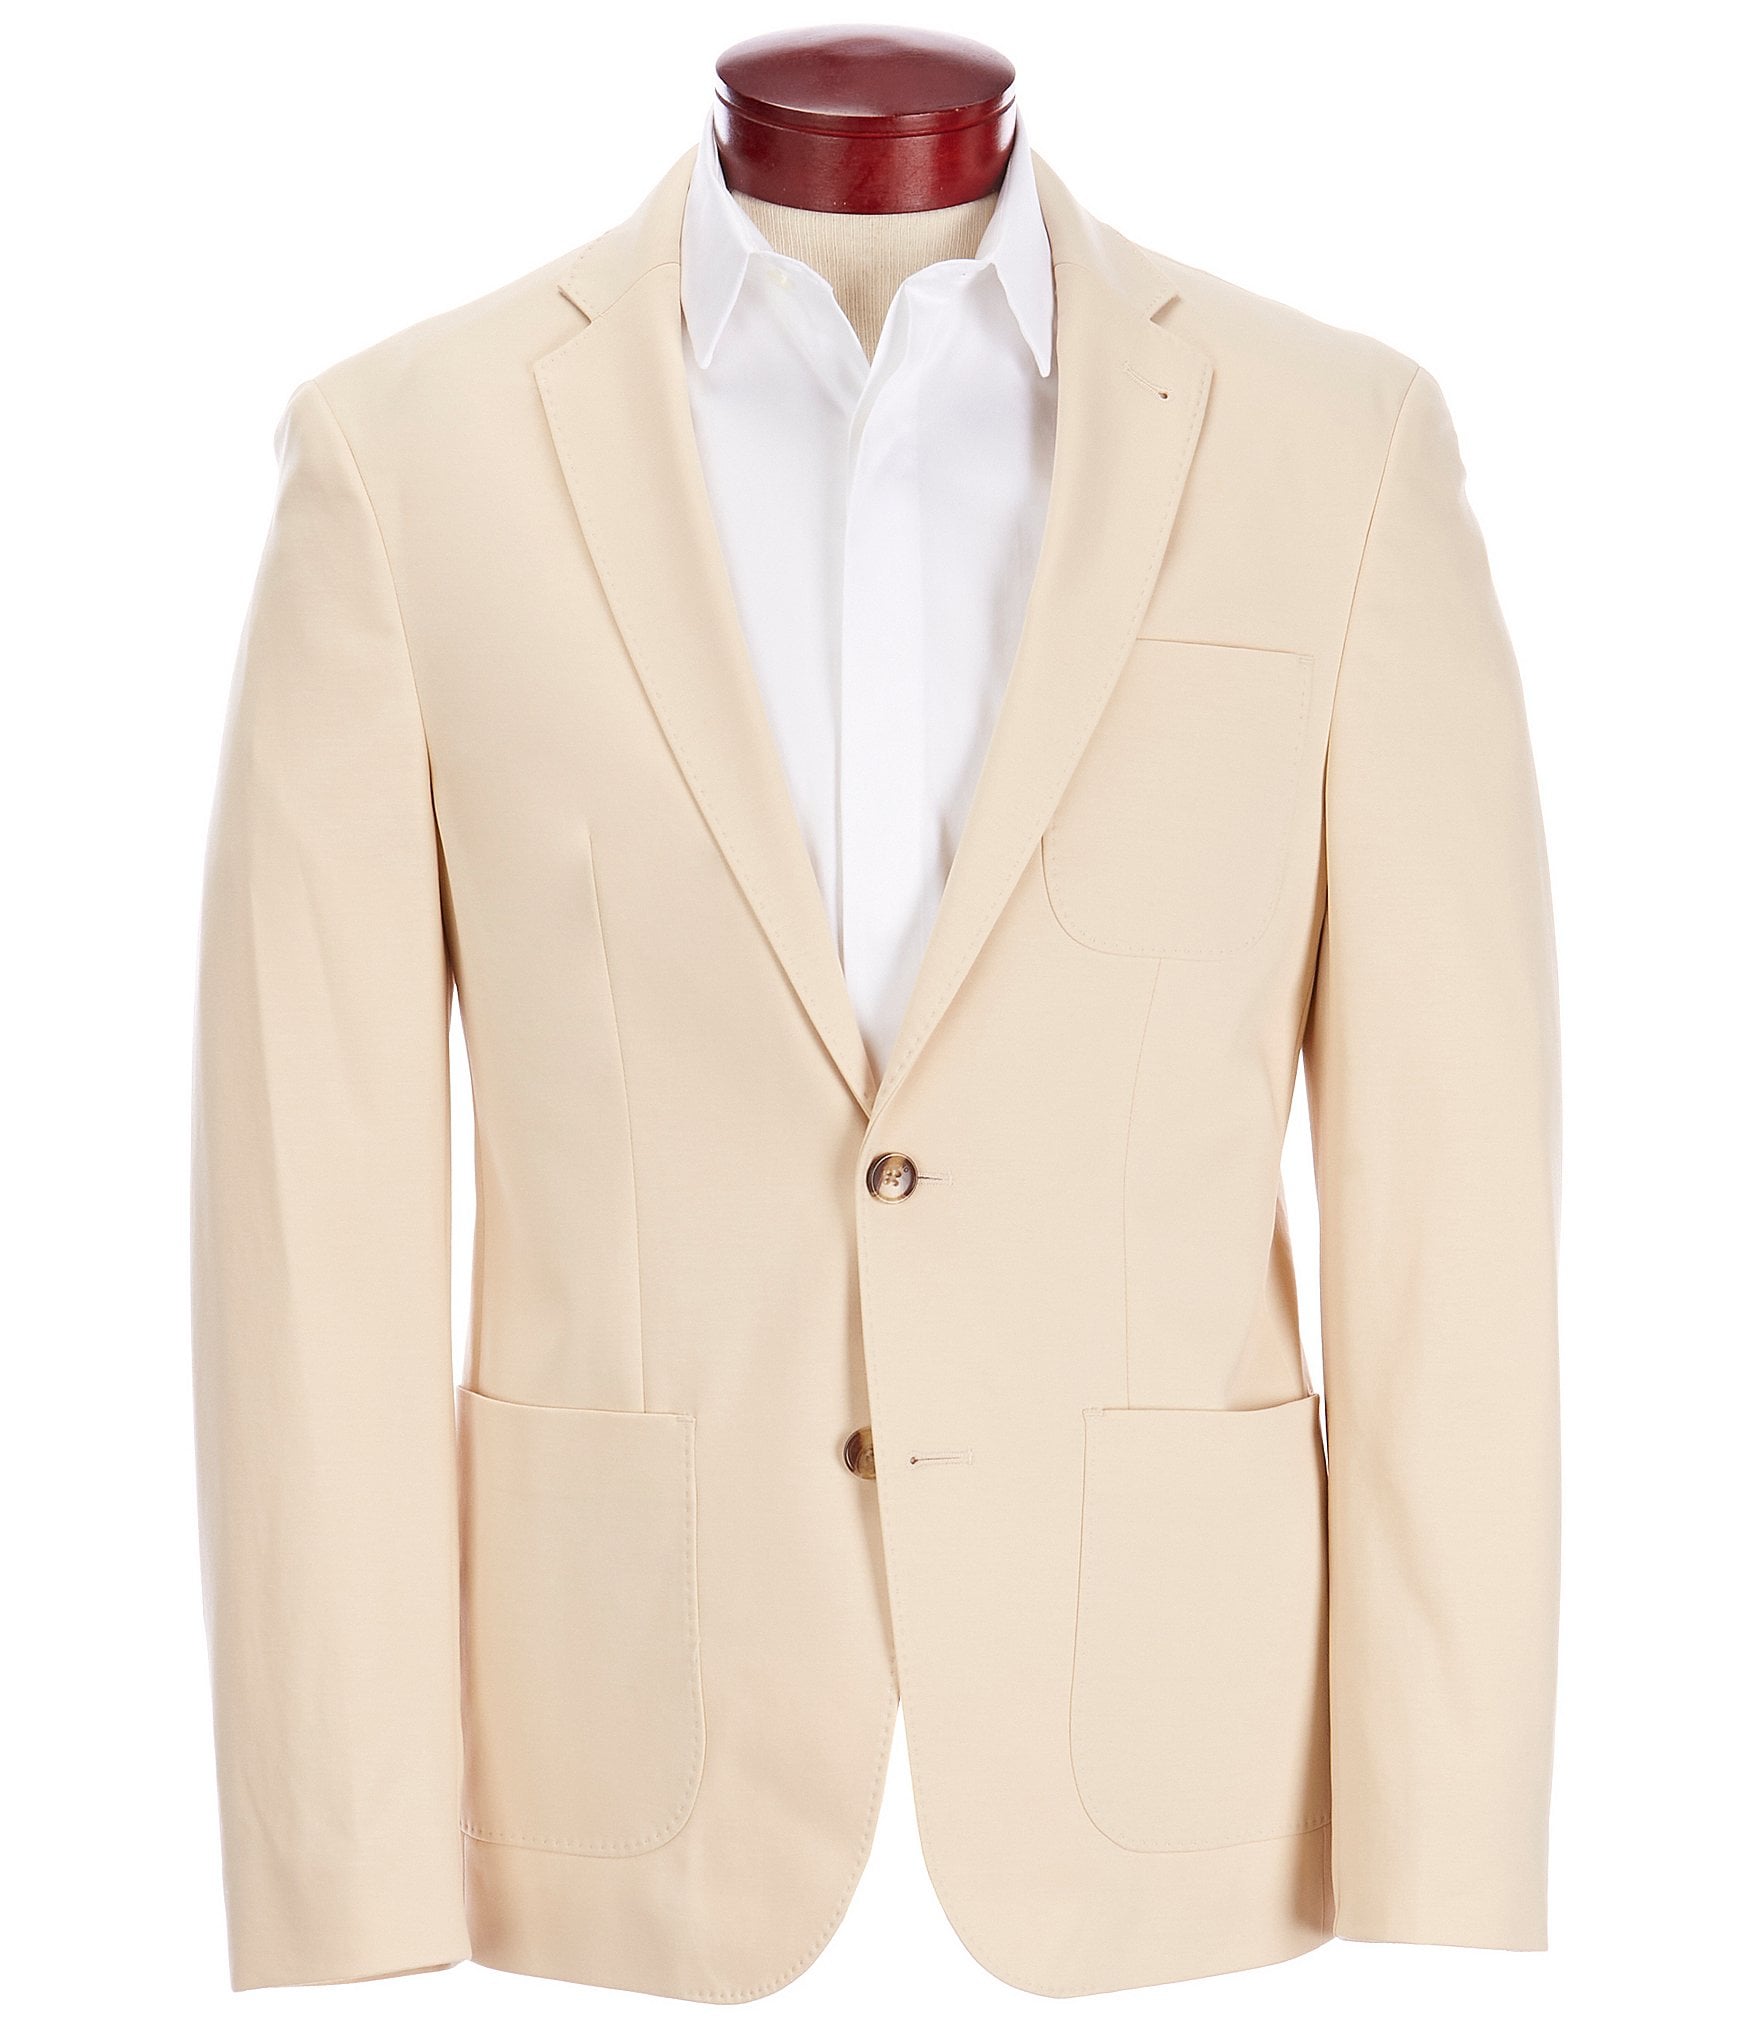 Murano Wardrobe Essentials Slim-Fit Knit Suit Separates Blazer | Dillard's